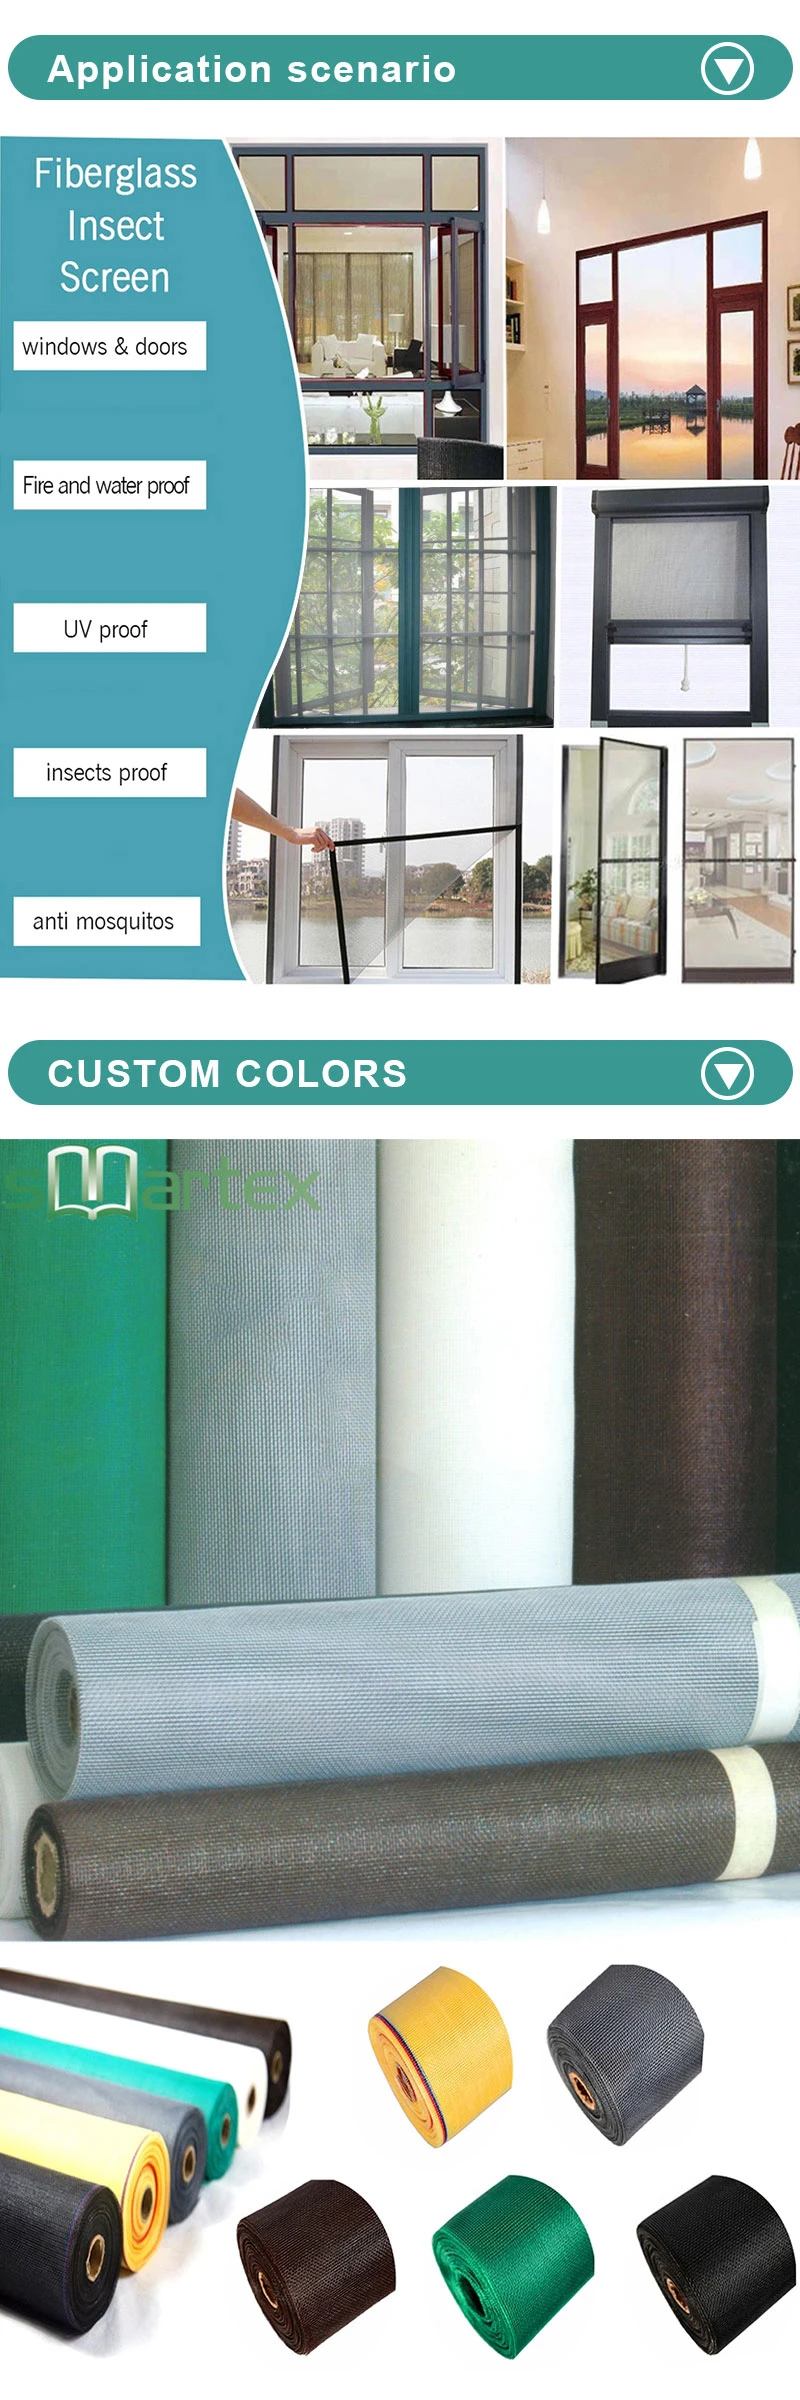 Colored PVC Coated Fiberglass Insect Screen Window Mesh